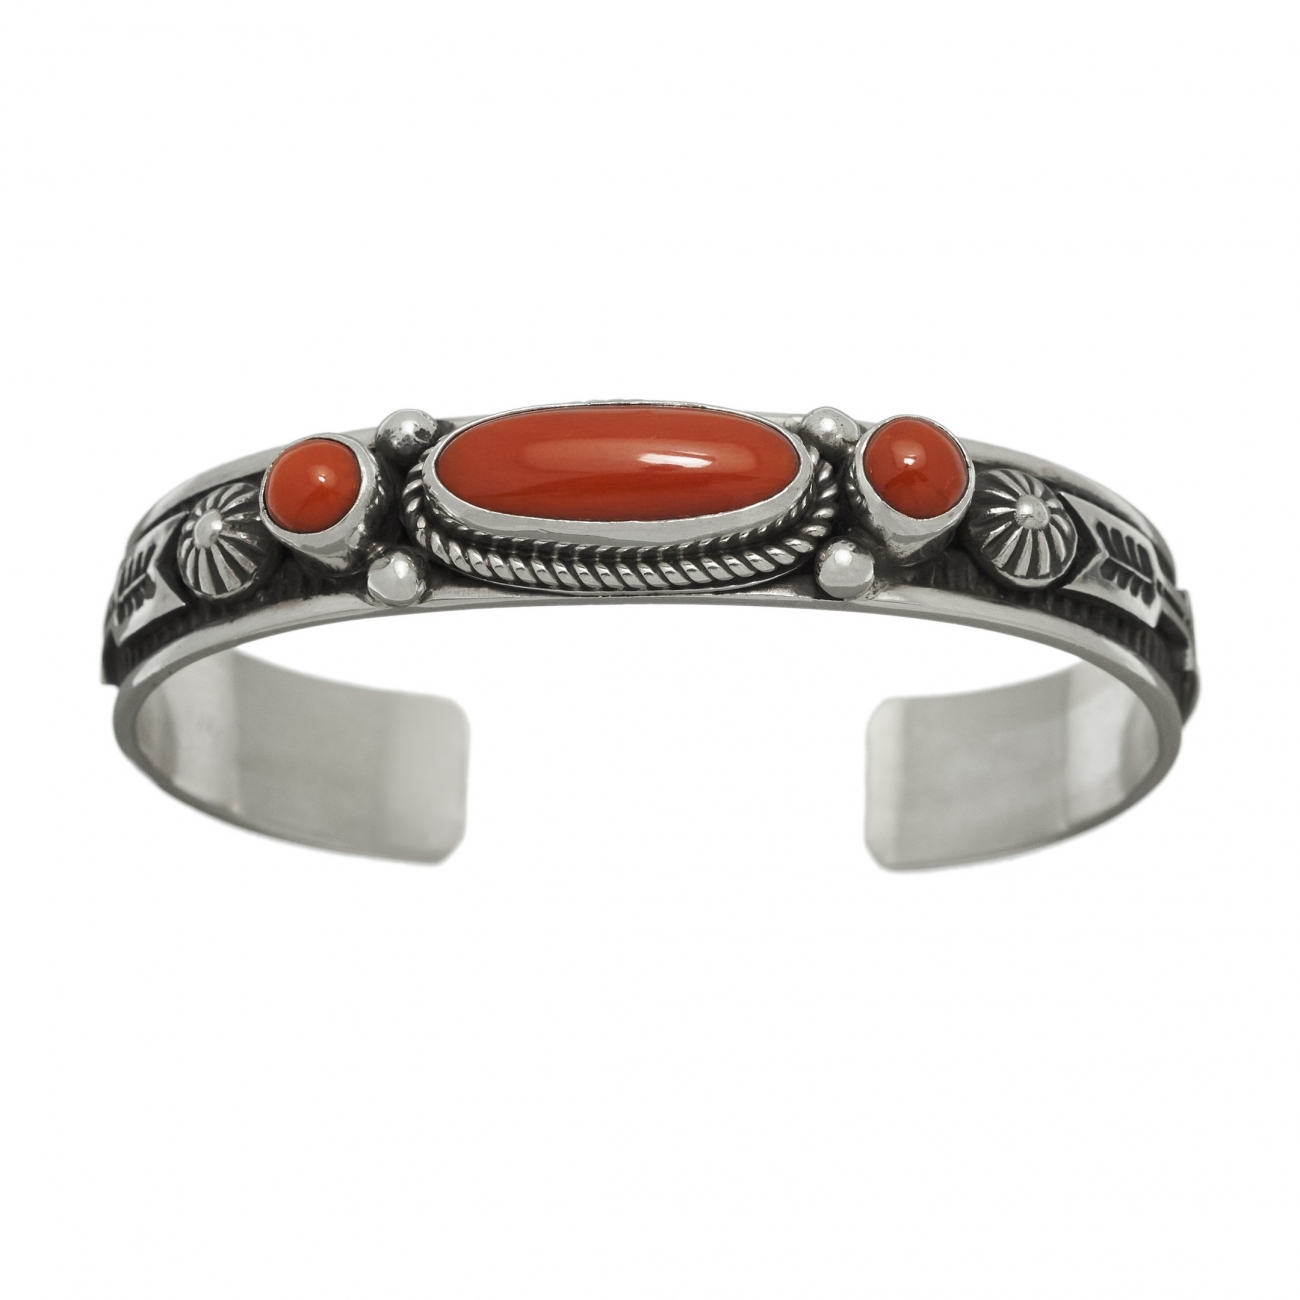 Navajo bracelet for women in coral and silver - Harpo Paris